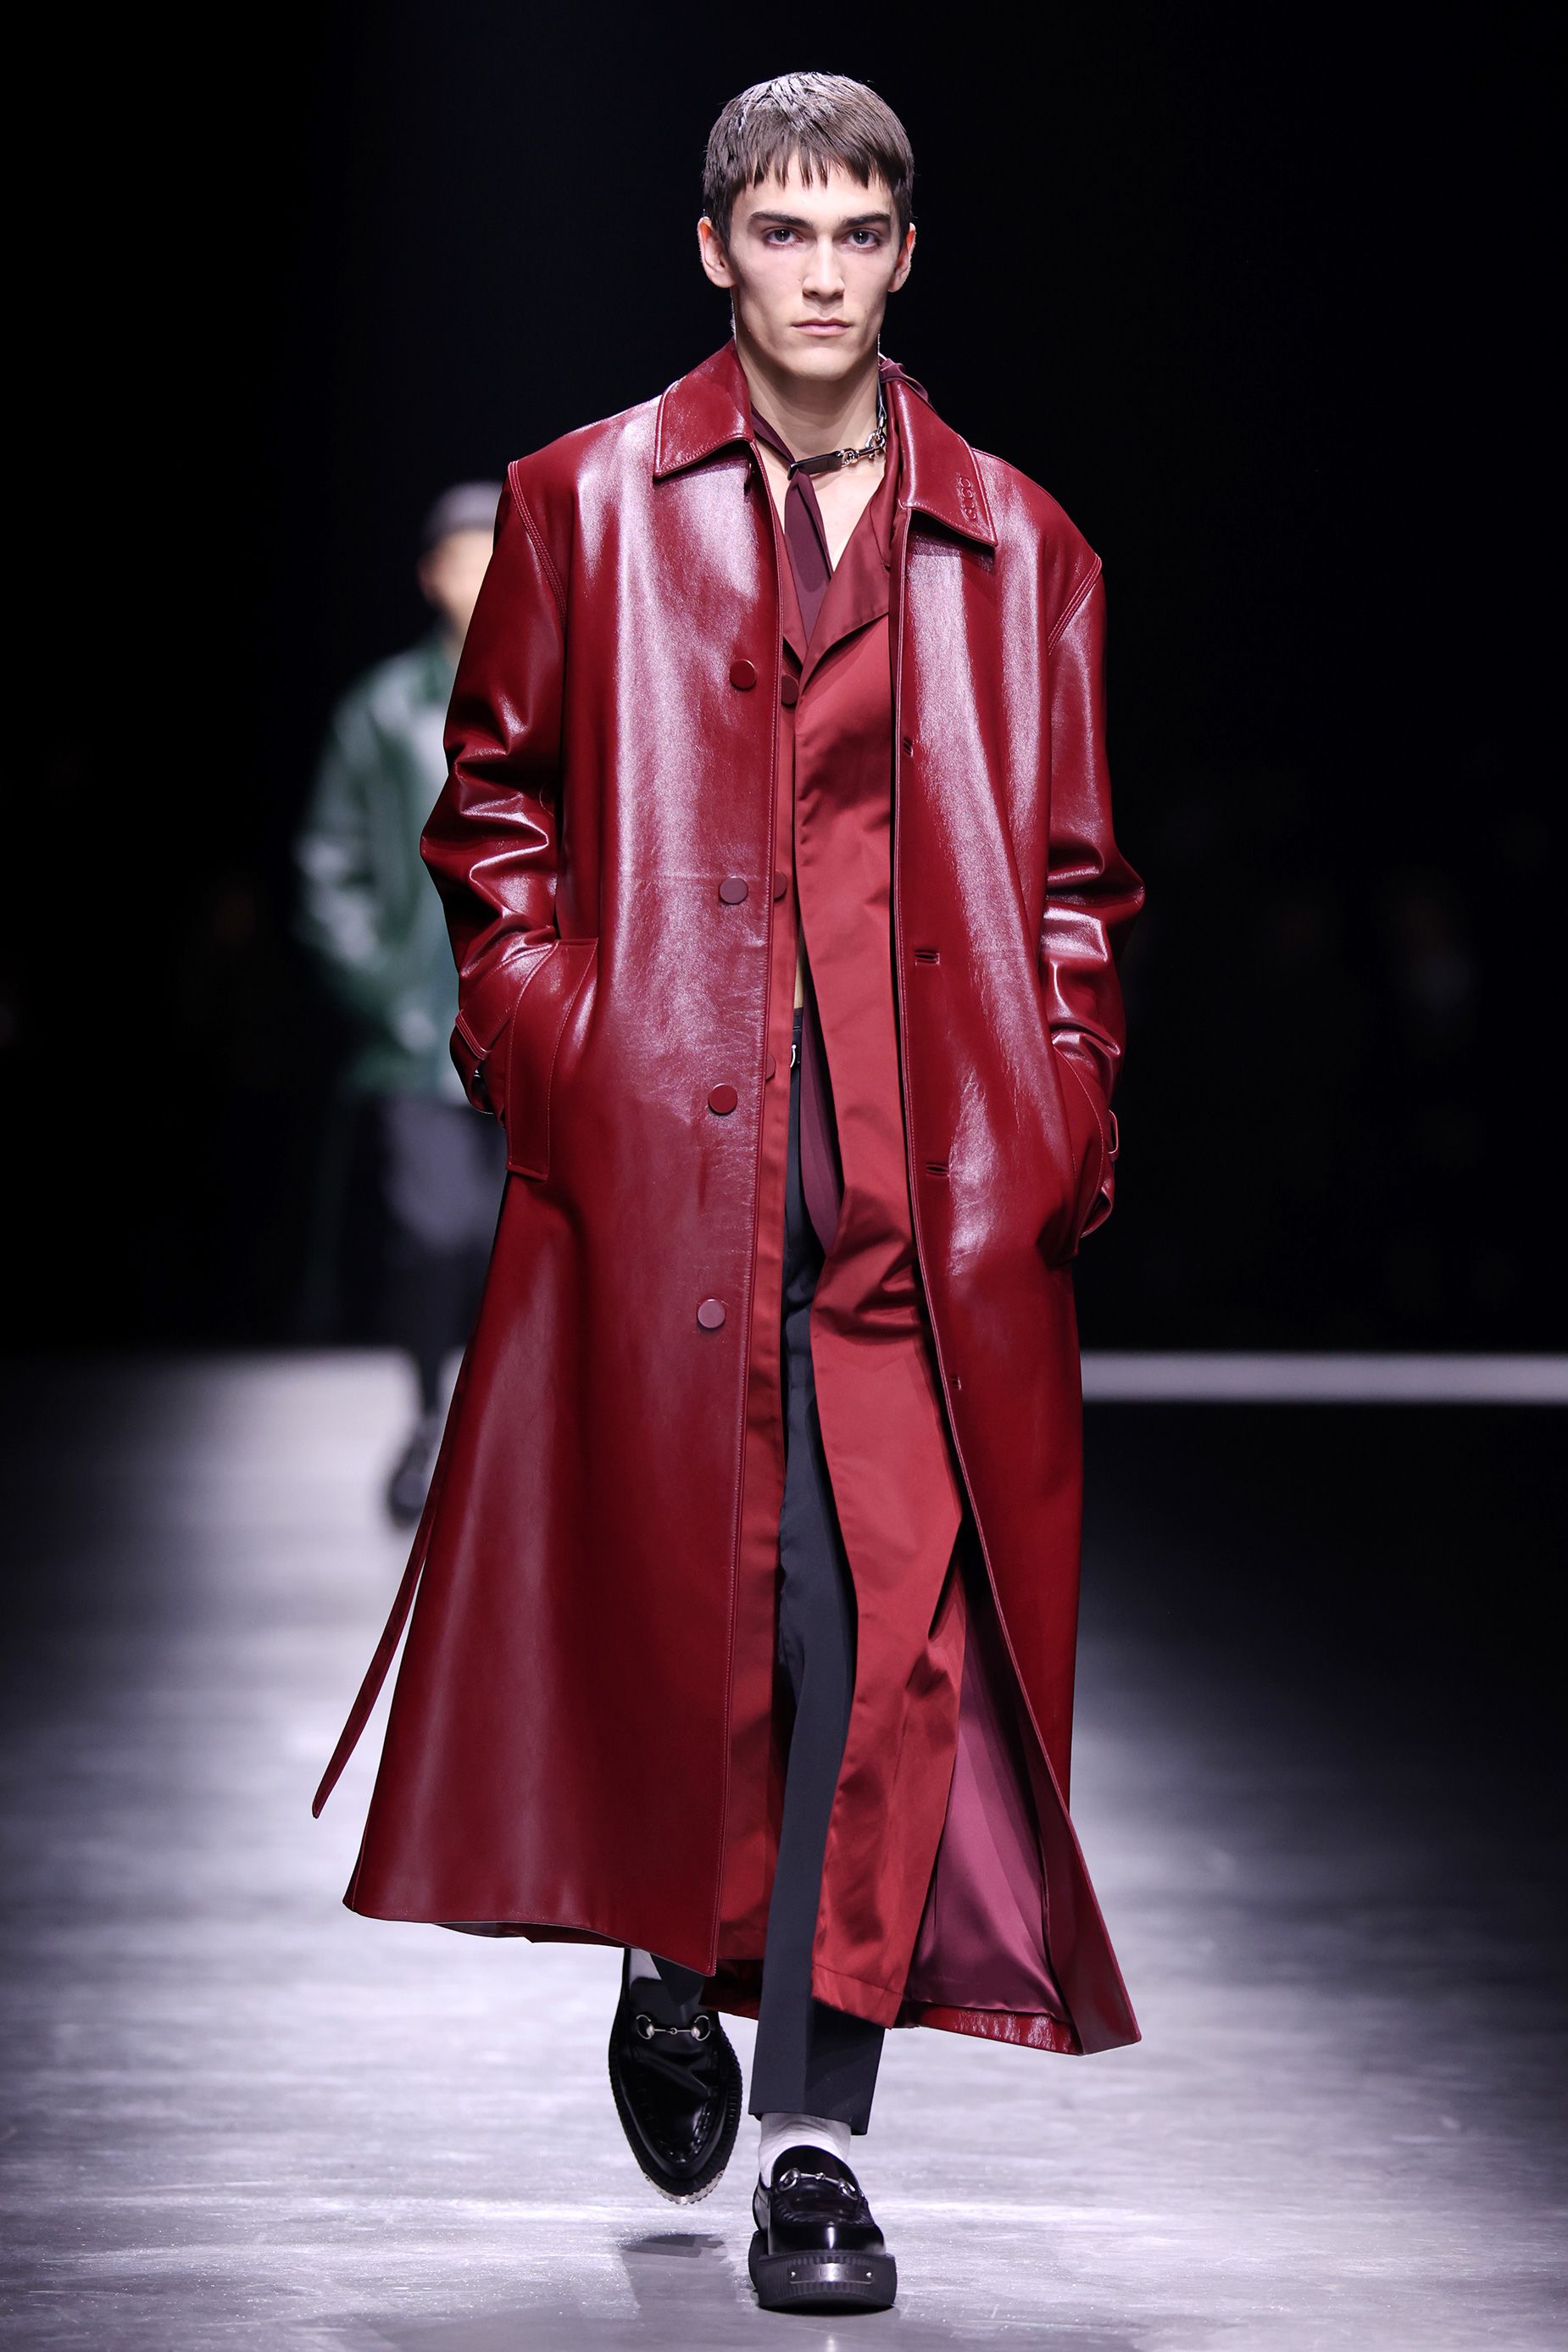 A long coat in "amphora red," designer Sabato de Sarno's new shade, on display at Gucci.